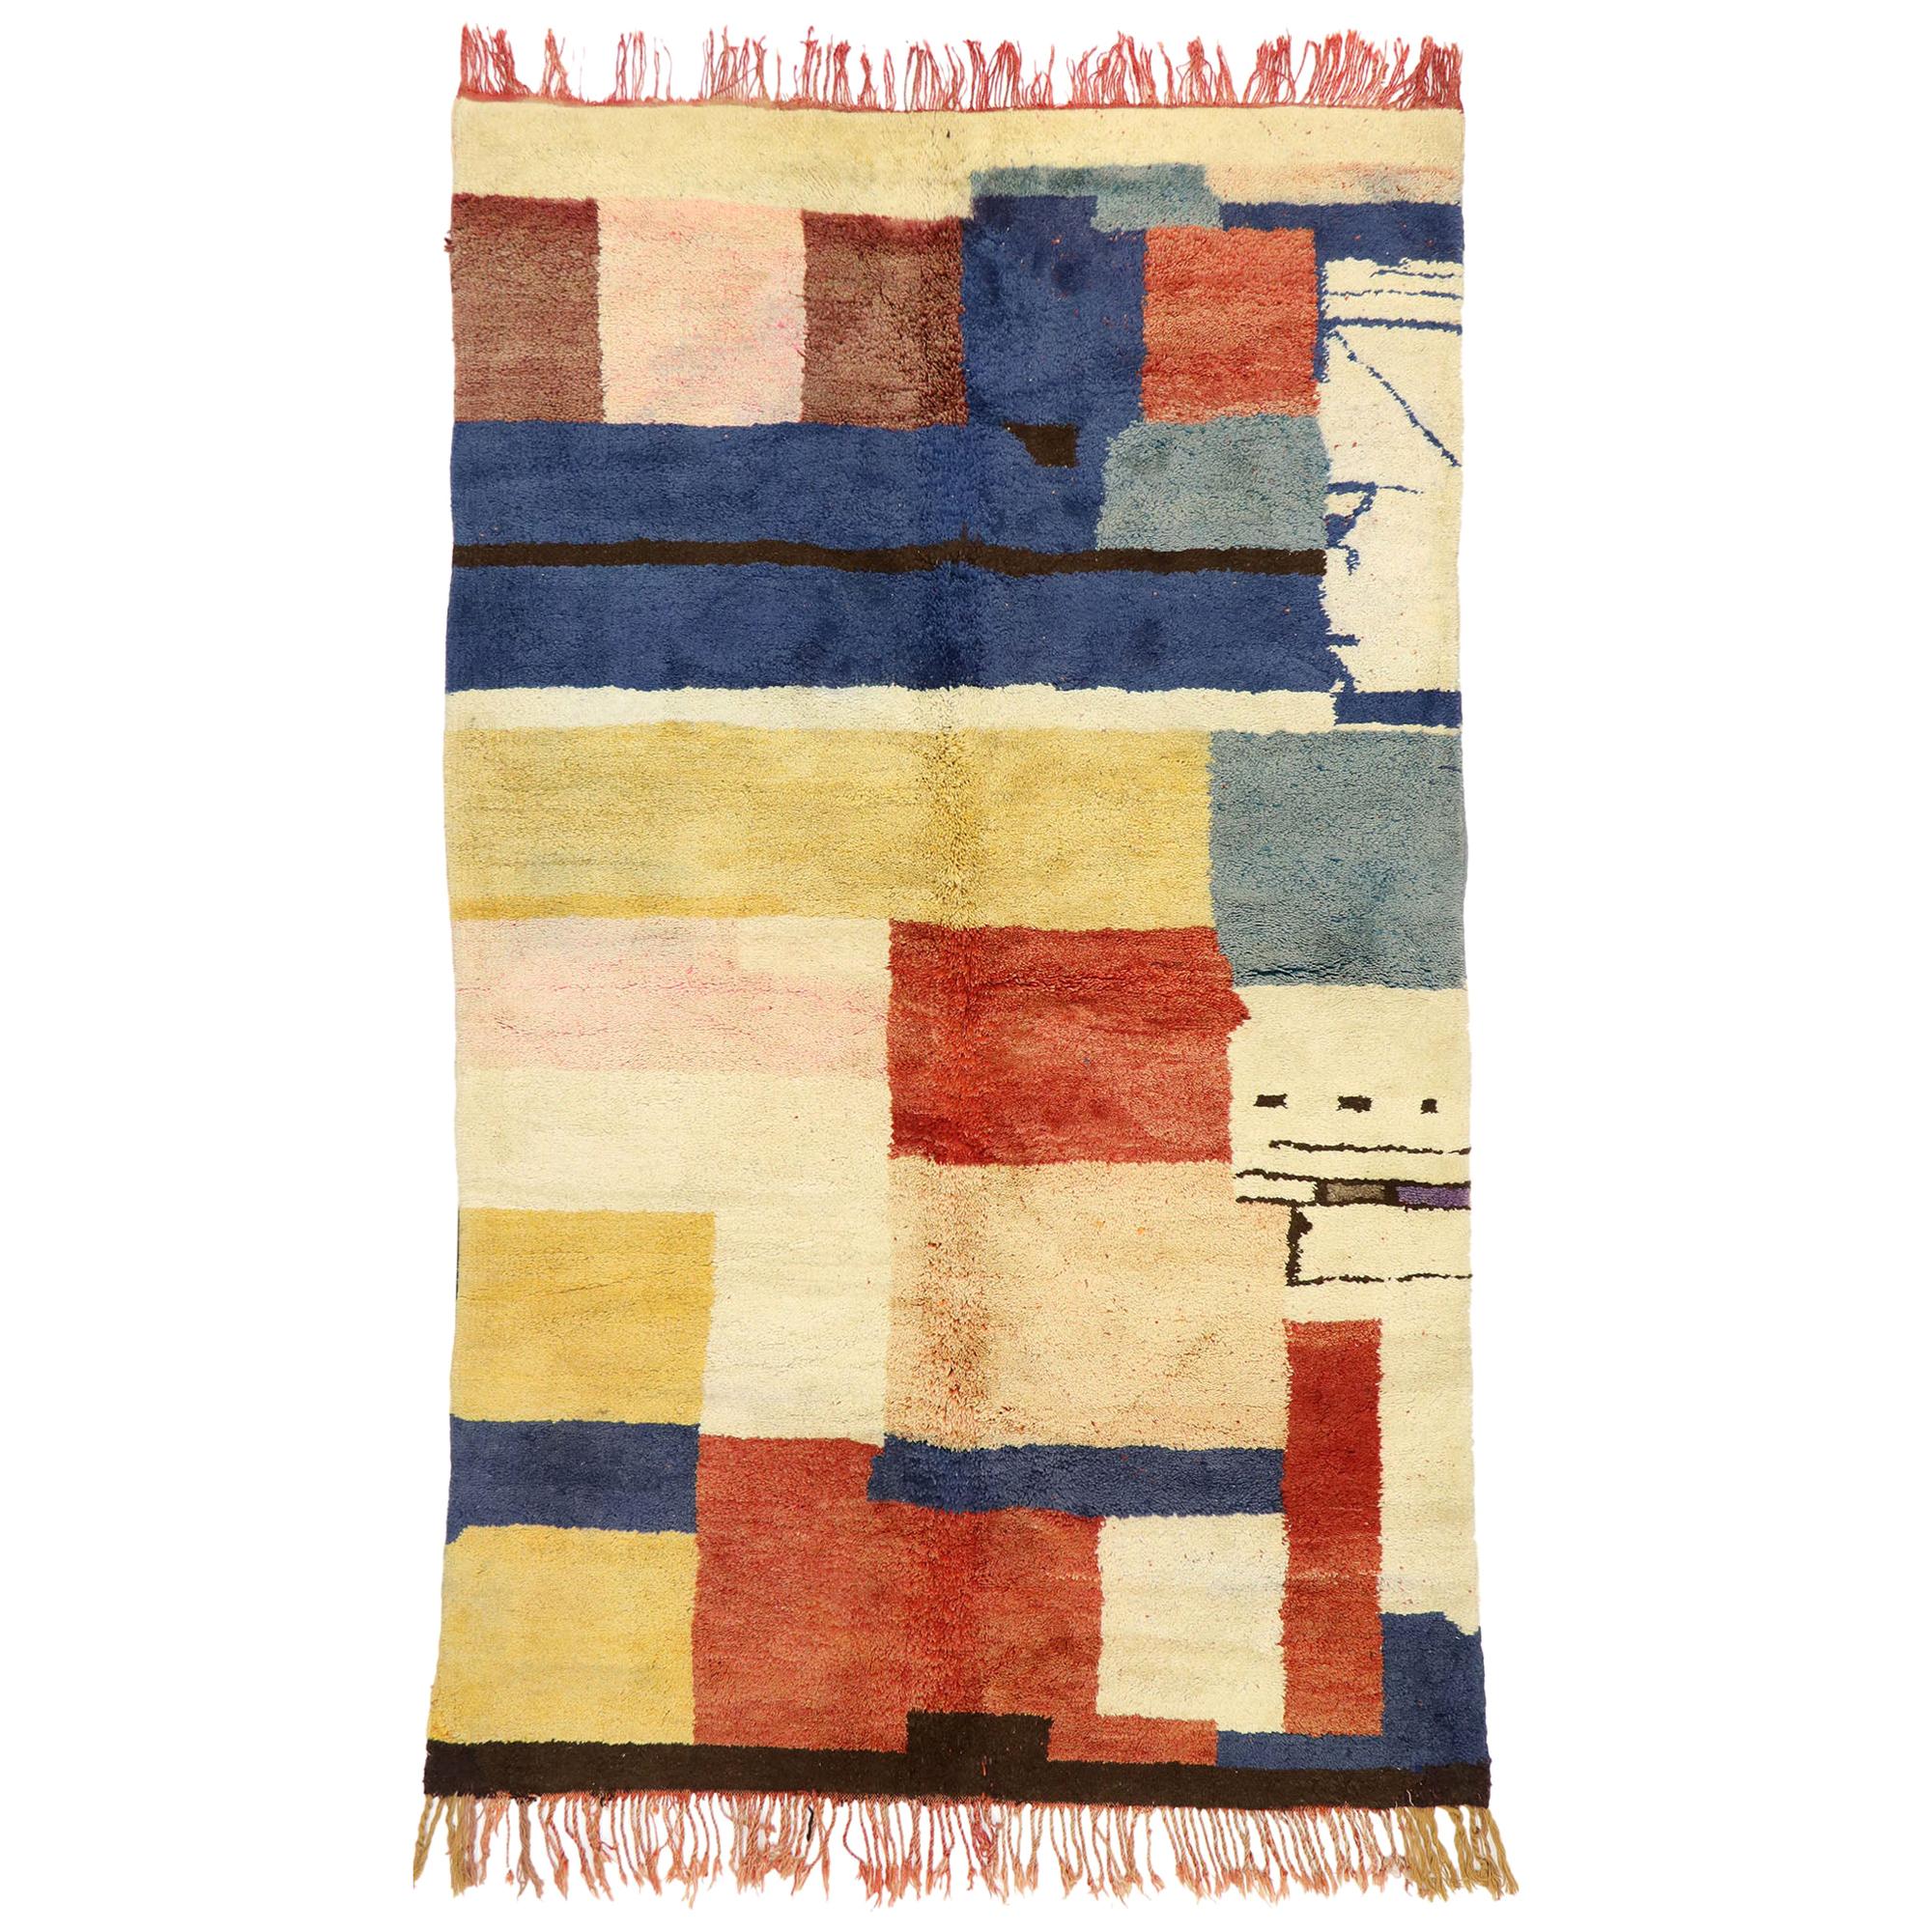 Vintage Berber Moroccan Rug with Postmodern Cubism Bauhaus Mondrian Style